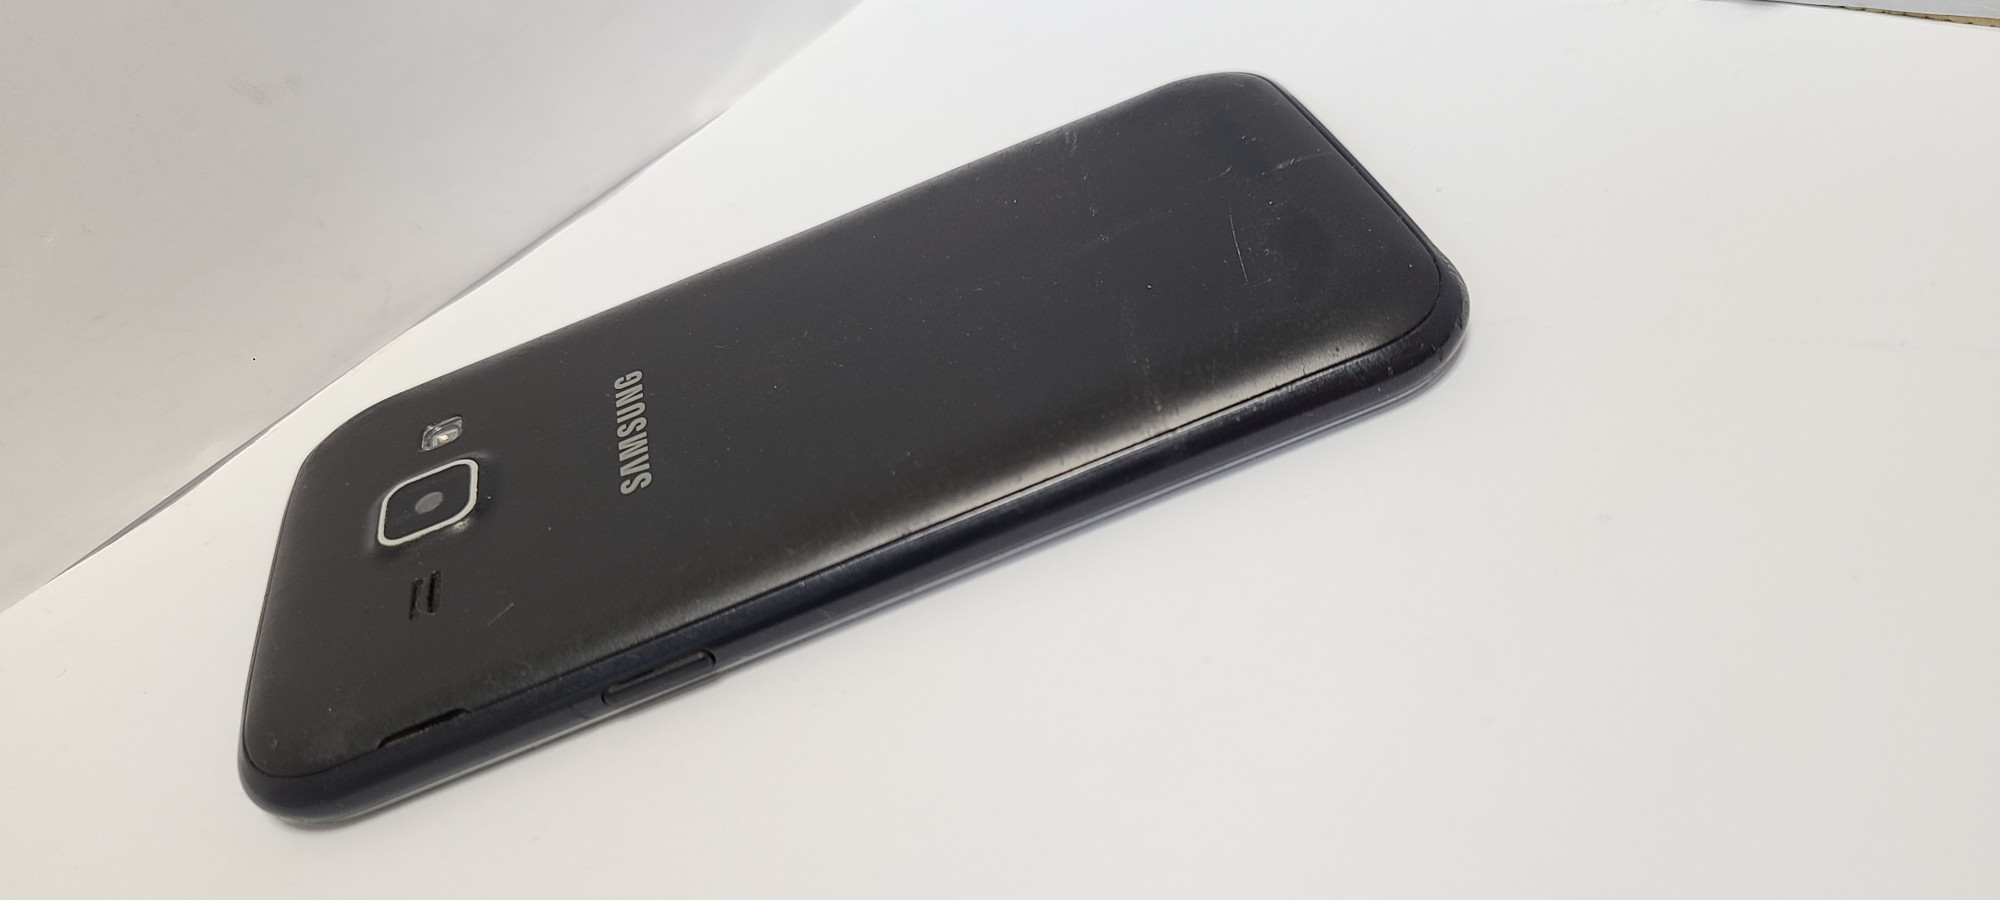 Samsung Galaxy J1 (SM-J100H) 4Gb 2